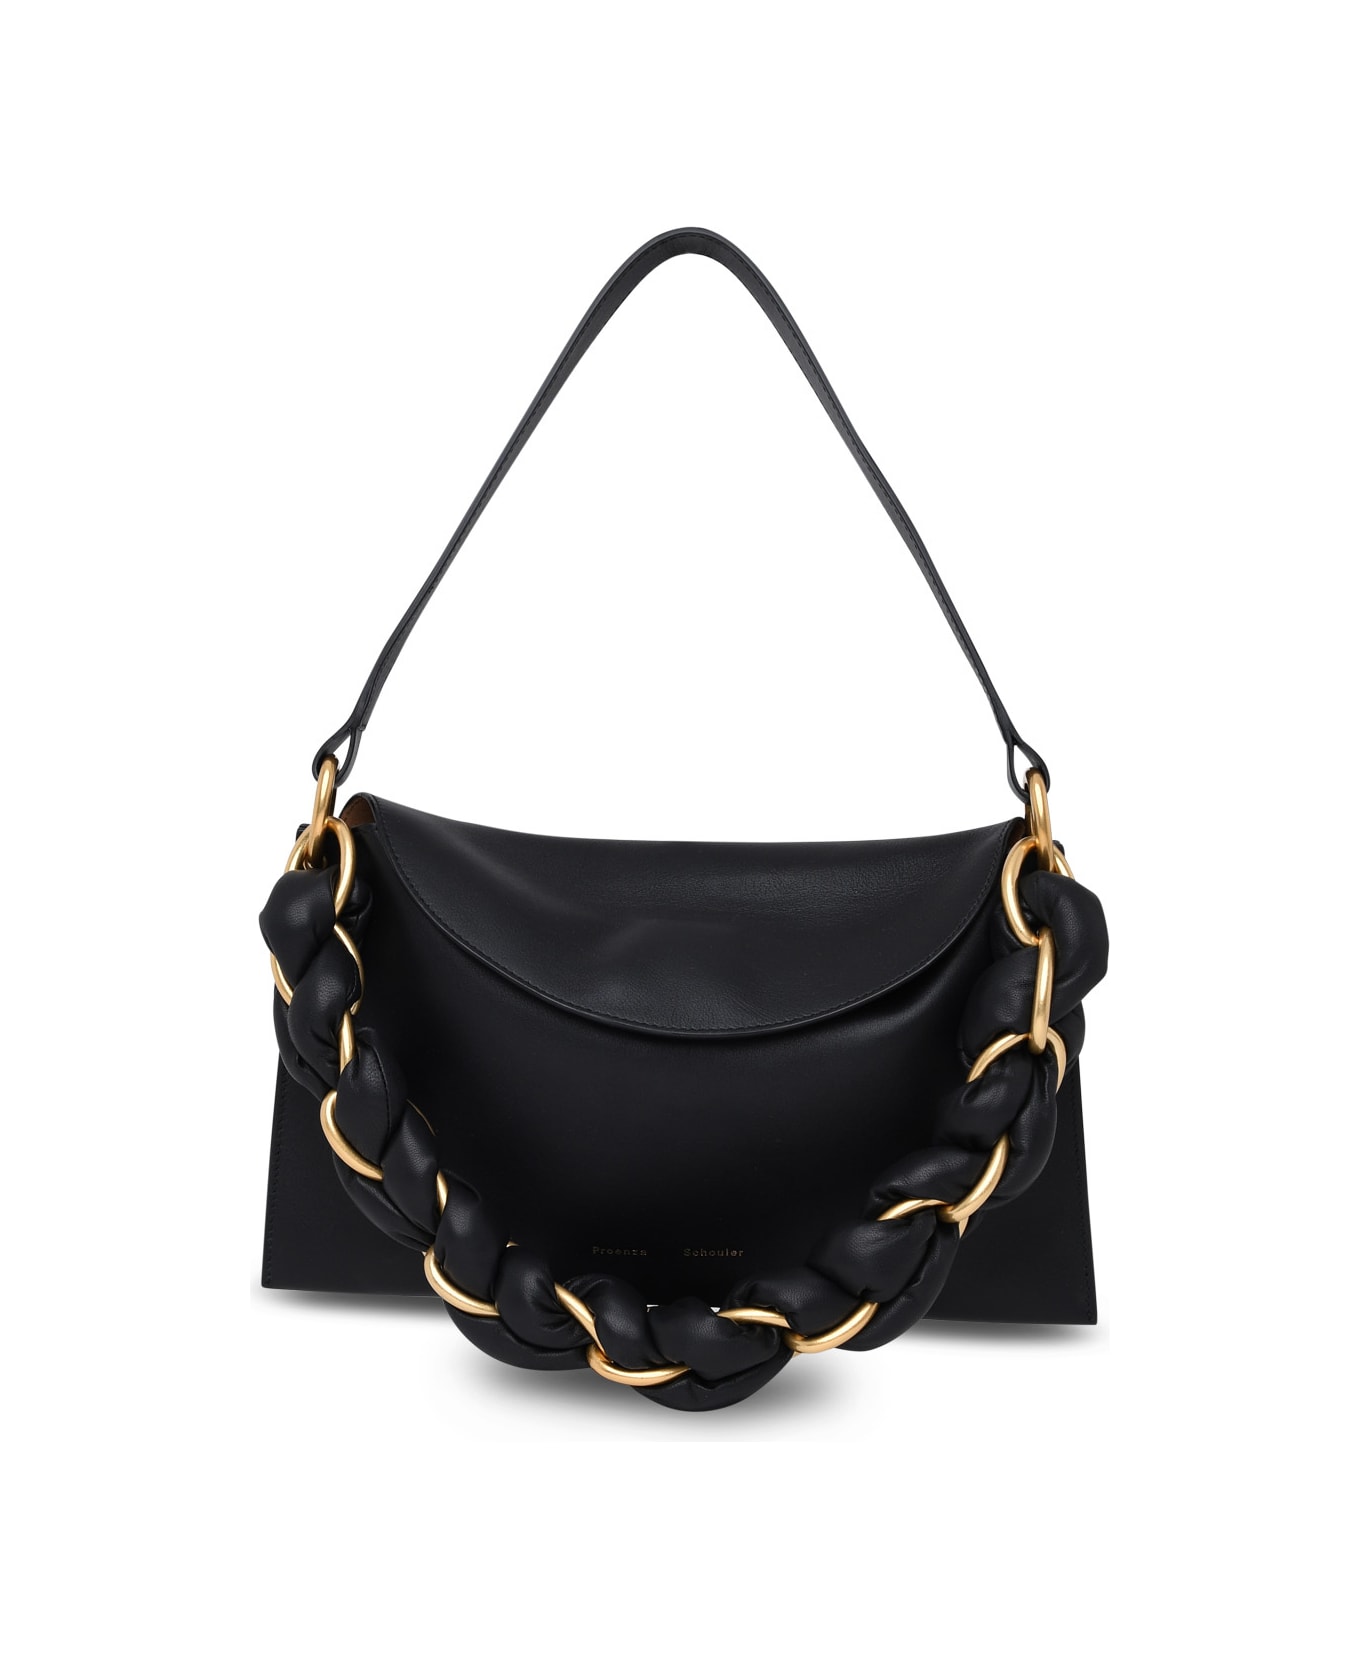 Proenza Schouler Braid Bag In Black Leather - Black